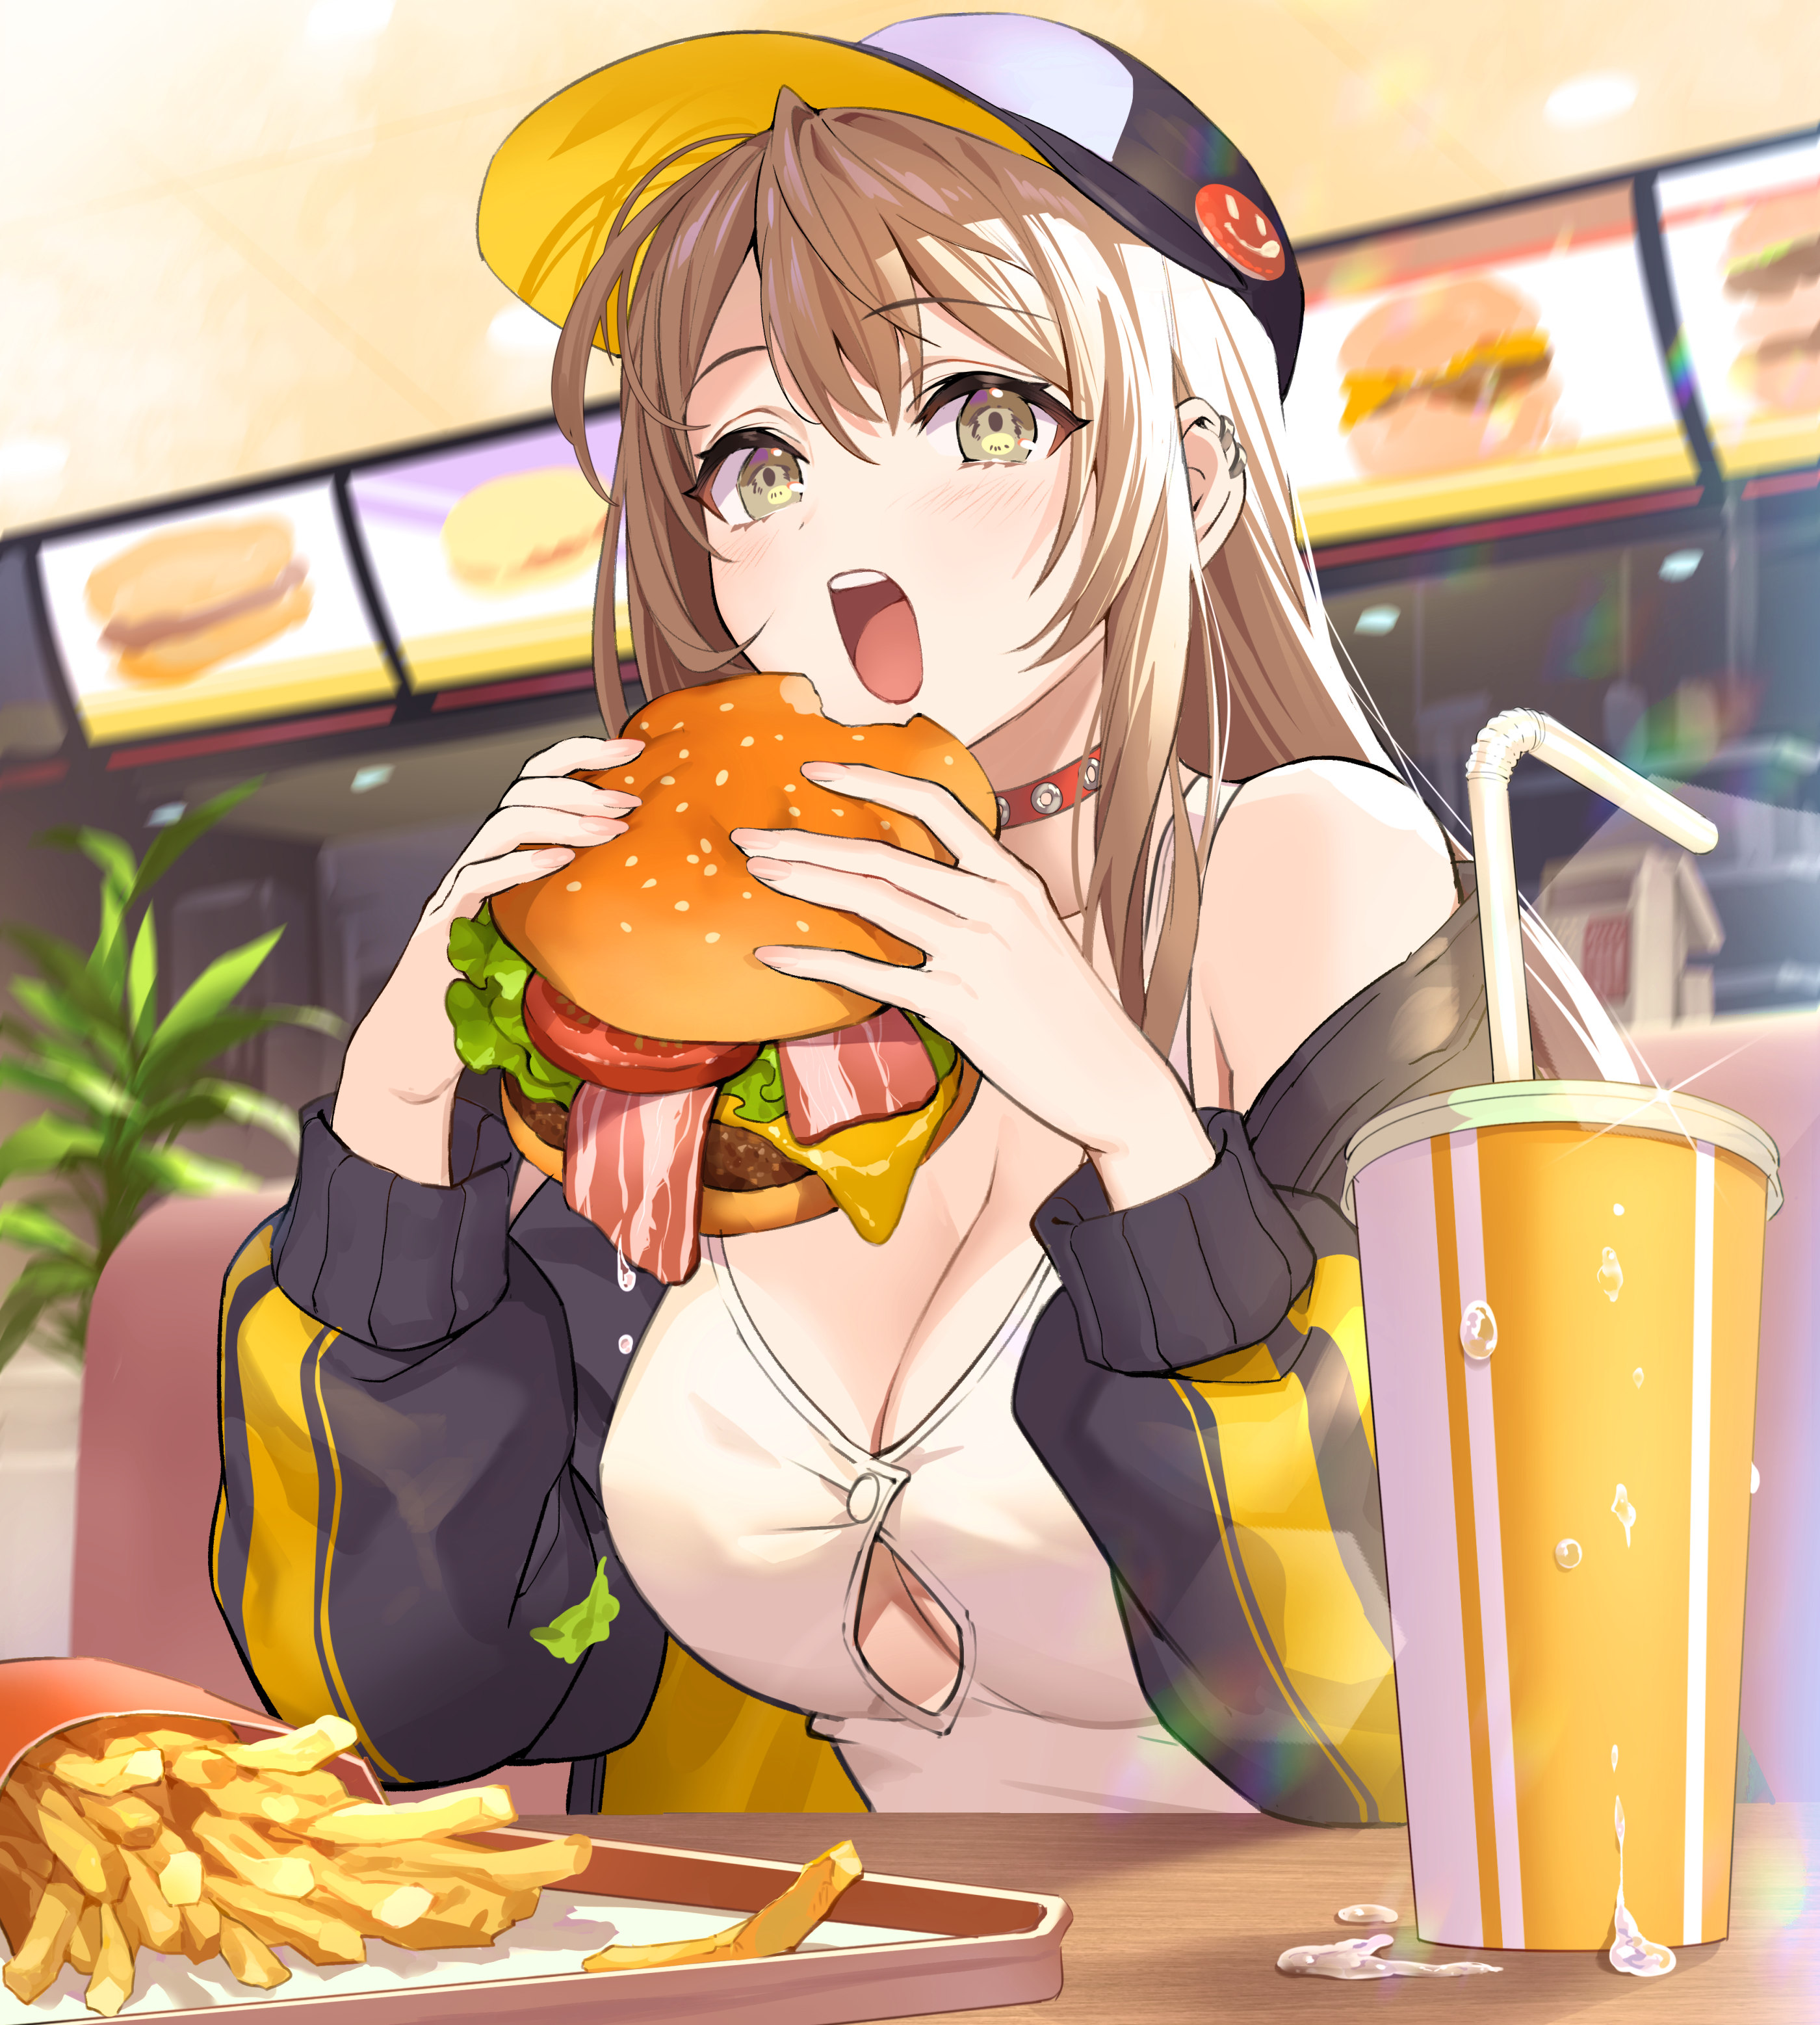 Anime 2800x3115 anime anime girls digital art artwork 2D portrait display anime girls eating big boobs open mouth burgers fries fast food cleavage baseball cap Teffish eating hat food drink looking at viewer